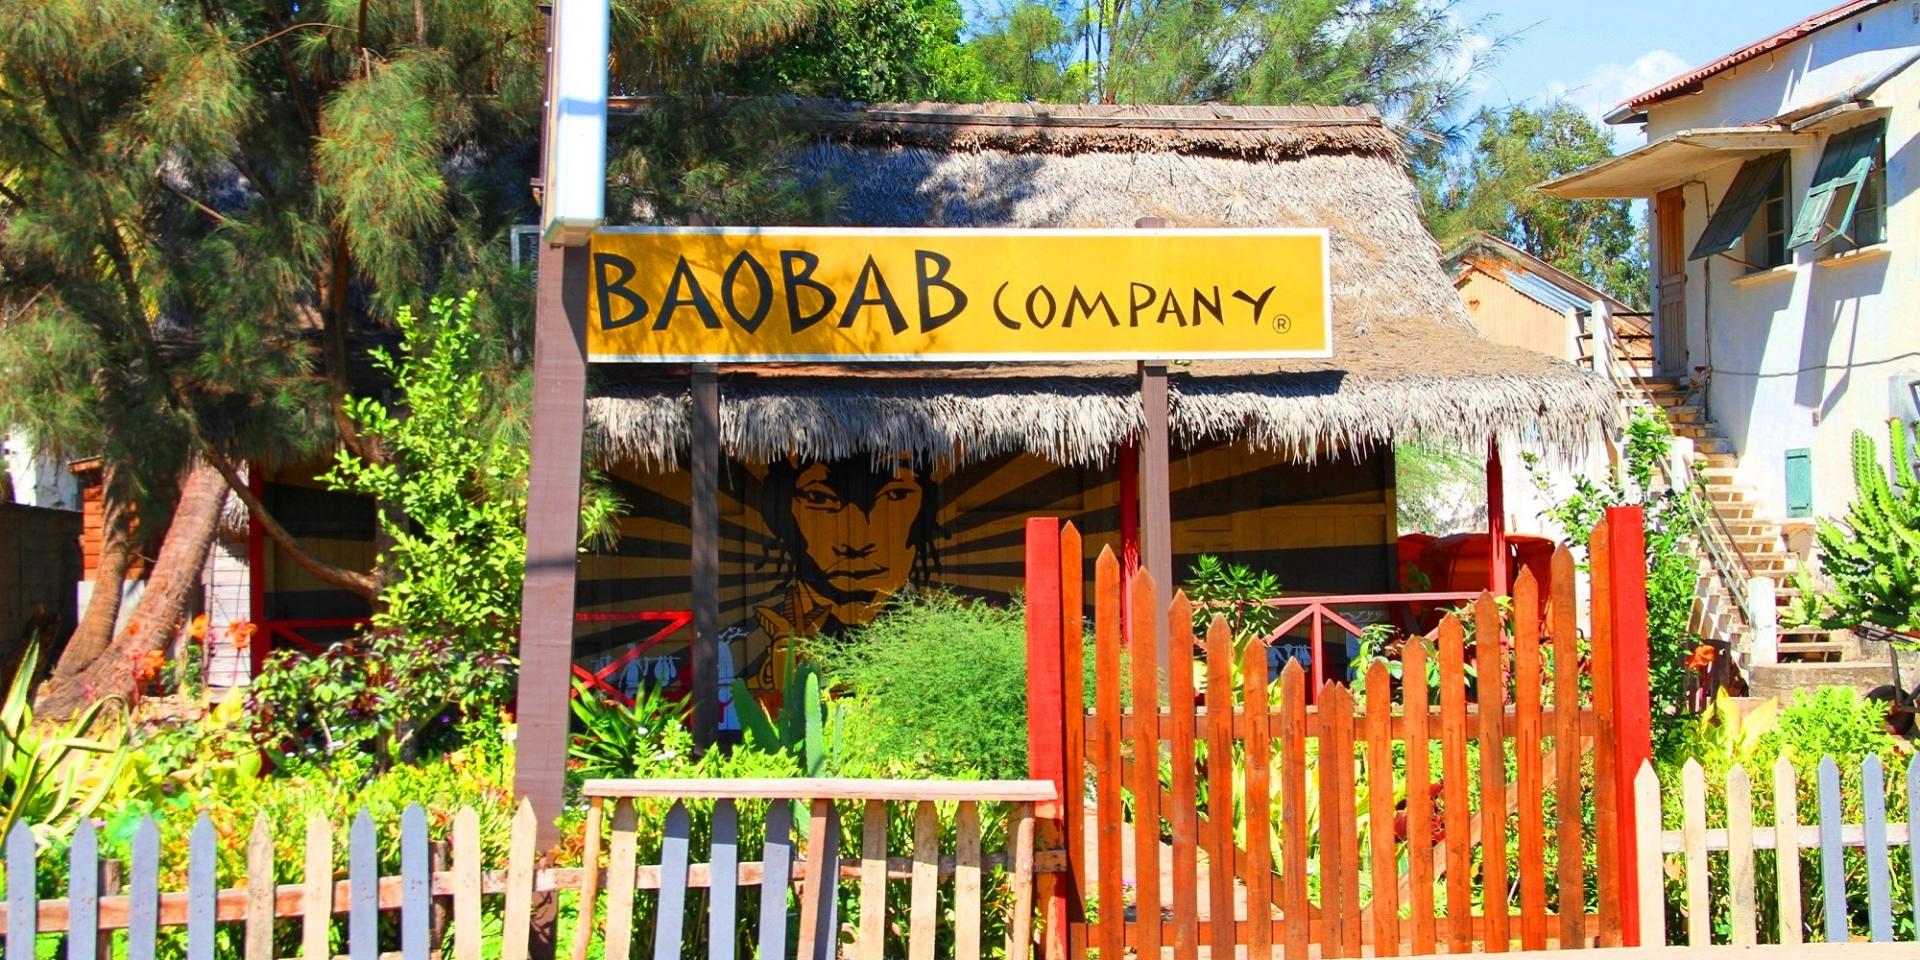 Baobab company 1